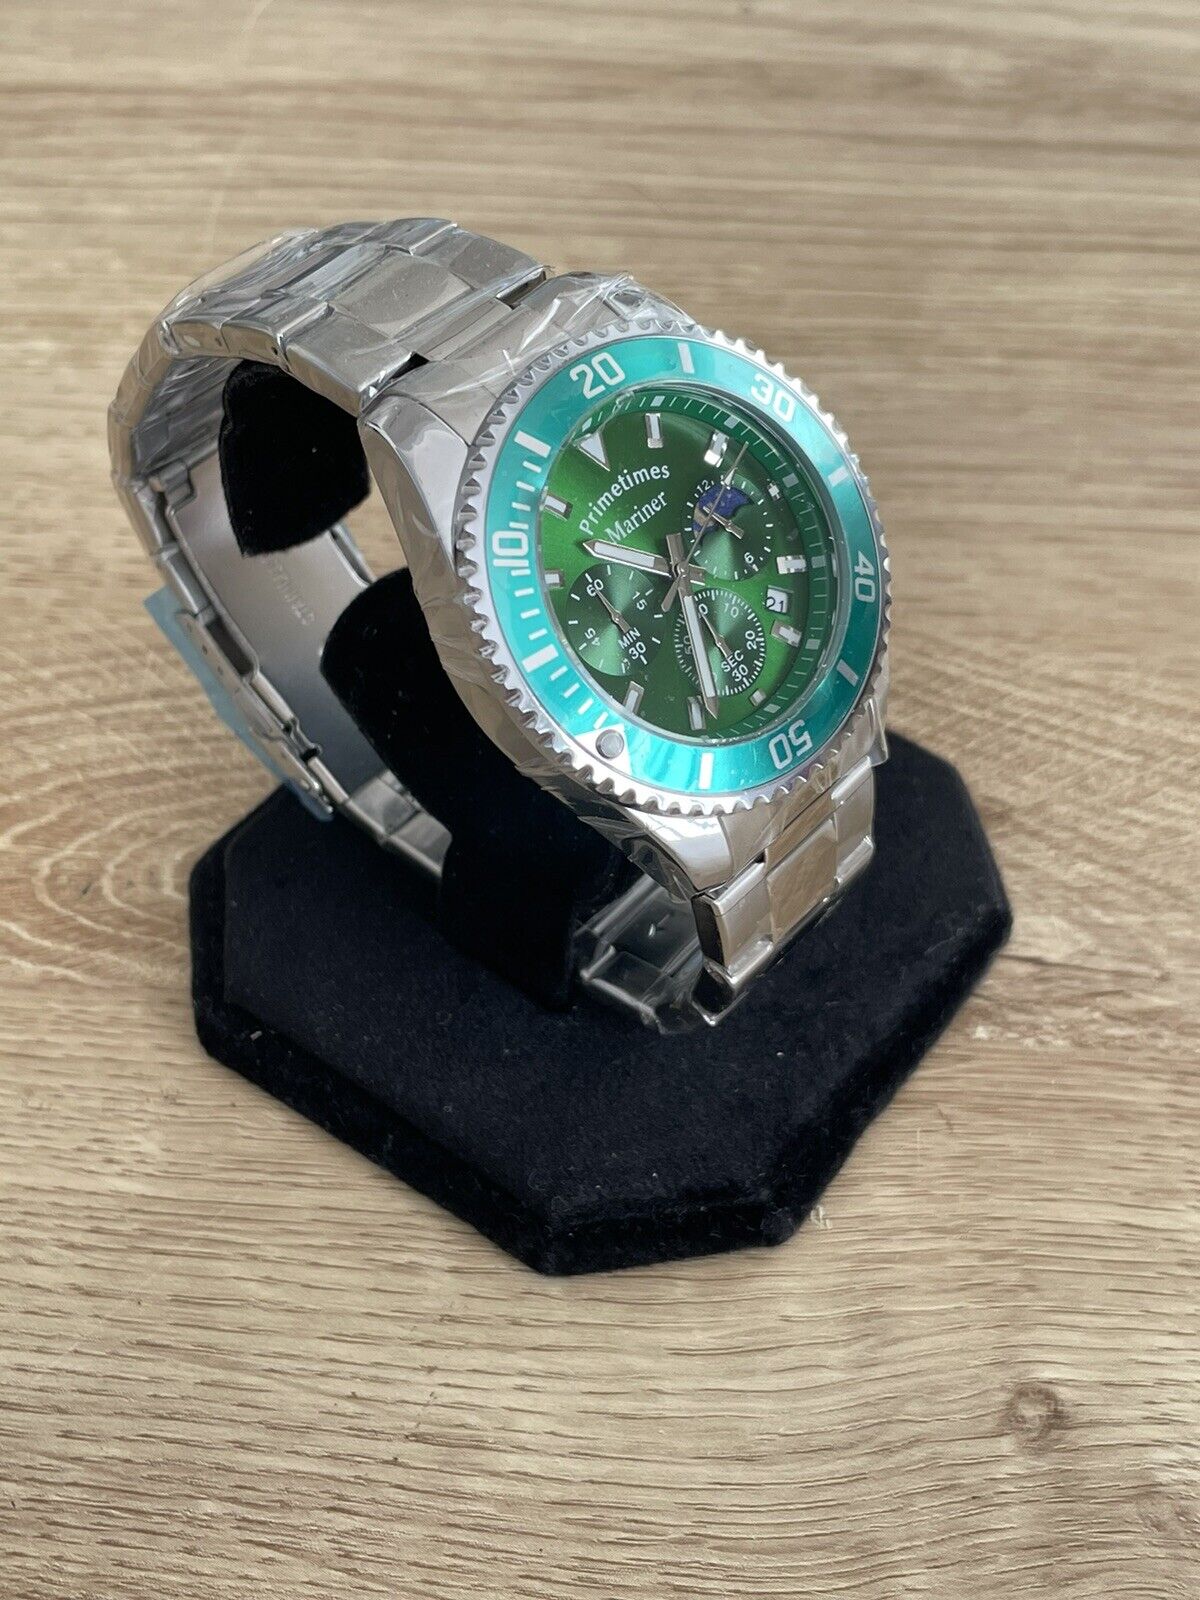 New Primetimes Mariner quartz watch #PT1967 - Westies Watches